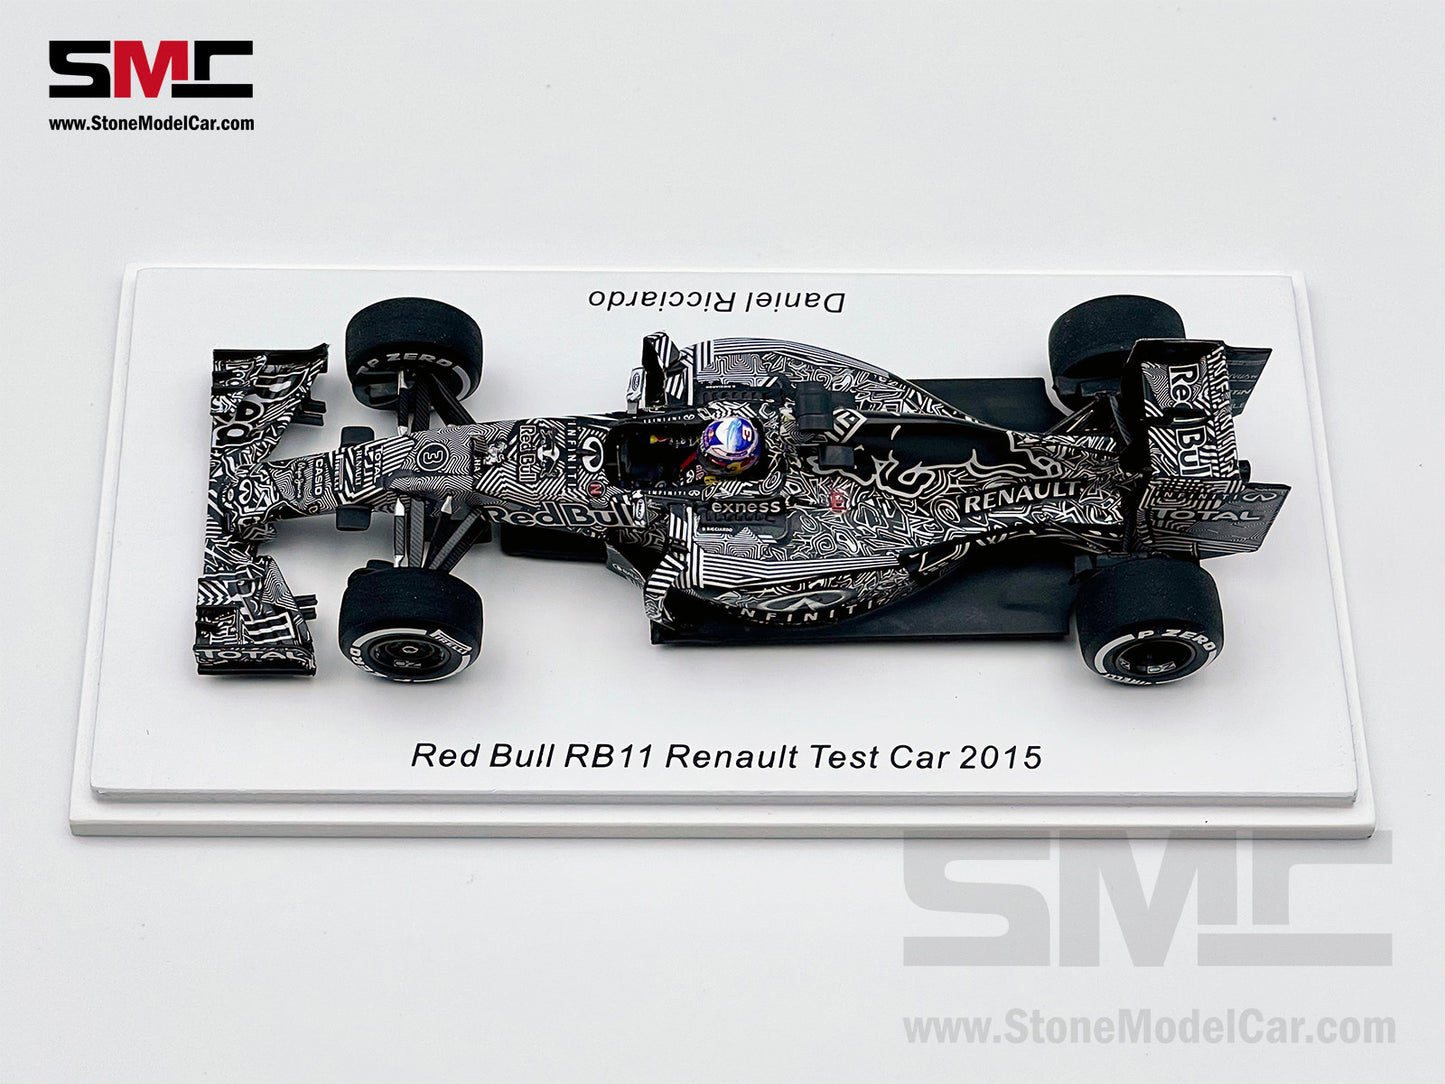 1:43 Spark Red Bull F1 RB11 #3 Daniel Ricciardo Special Testing Livery 2015